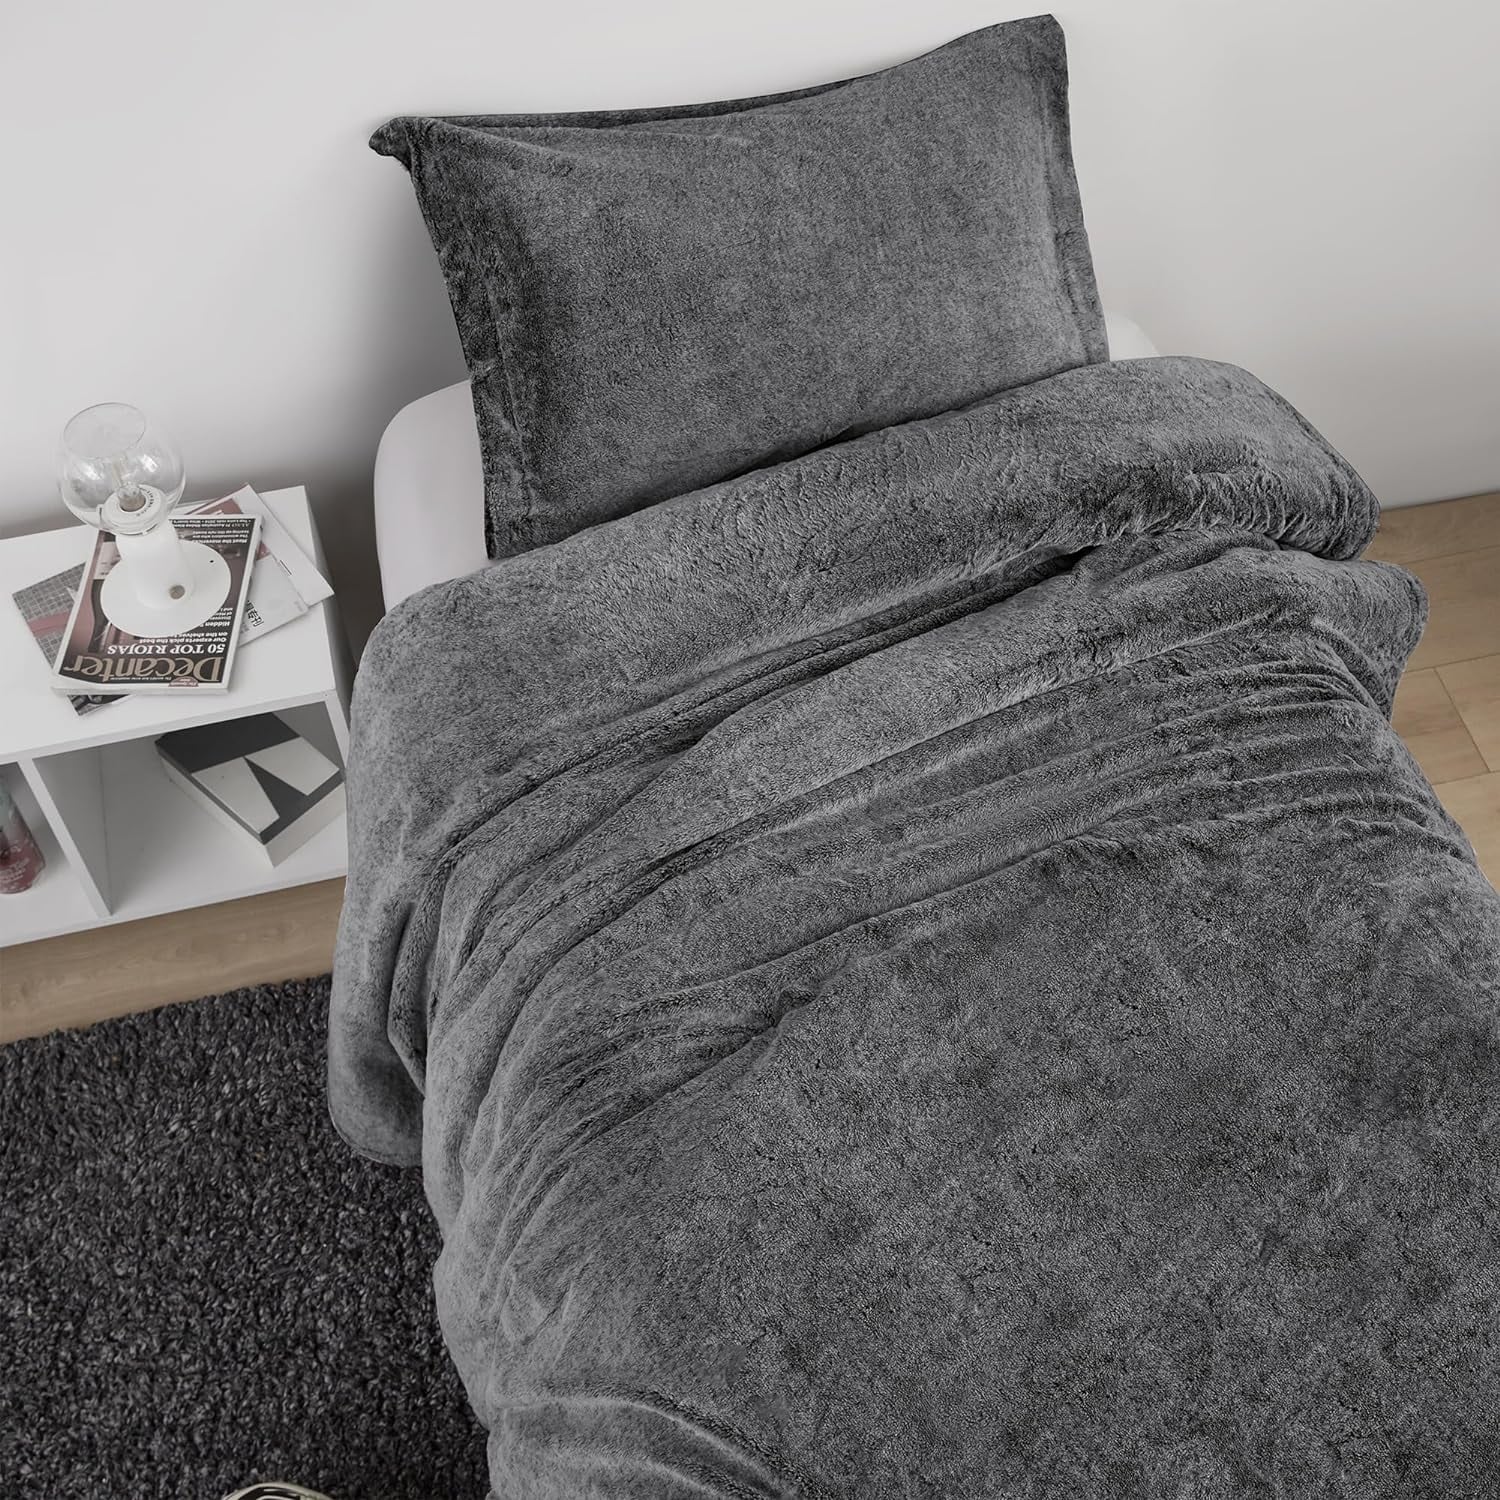 Siberian Husky - Coma Inducer Oversized Comforter